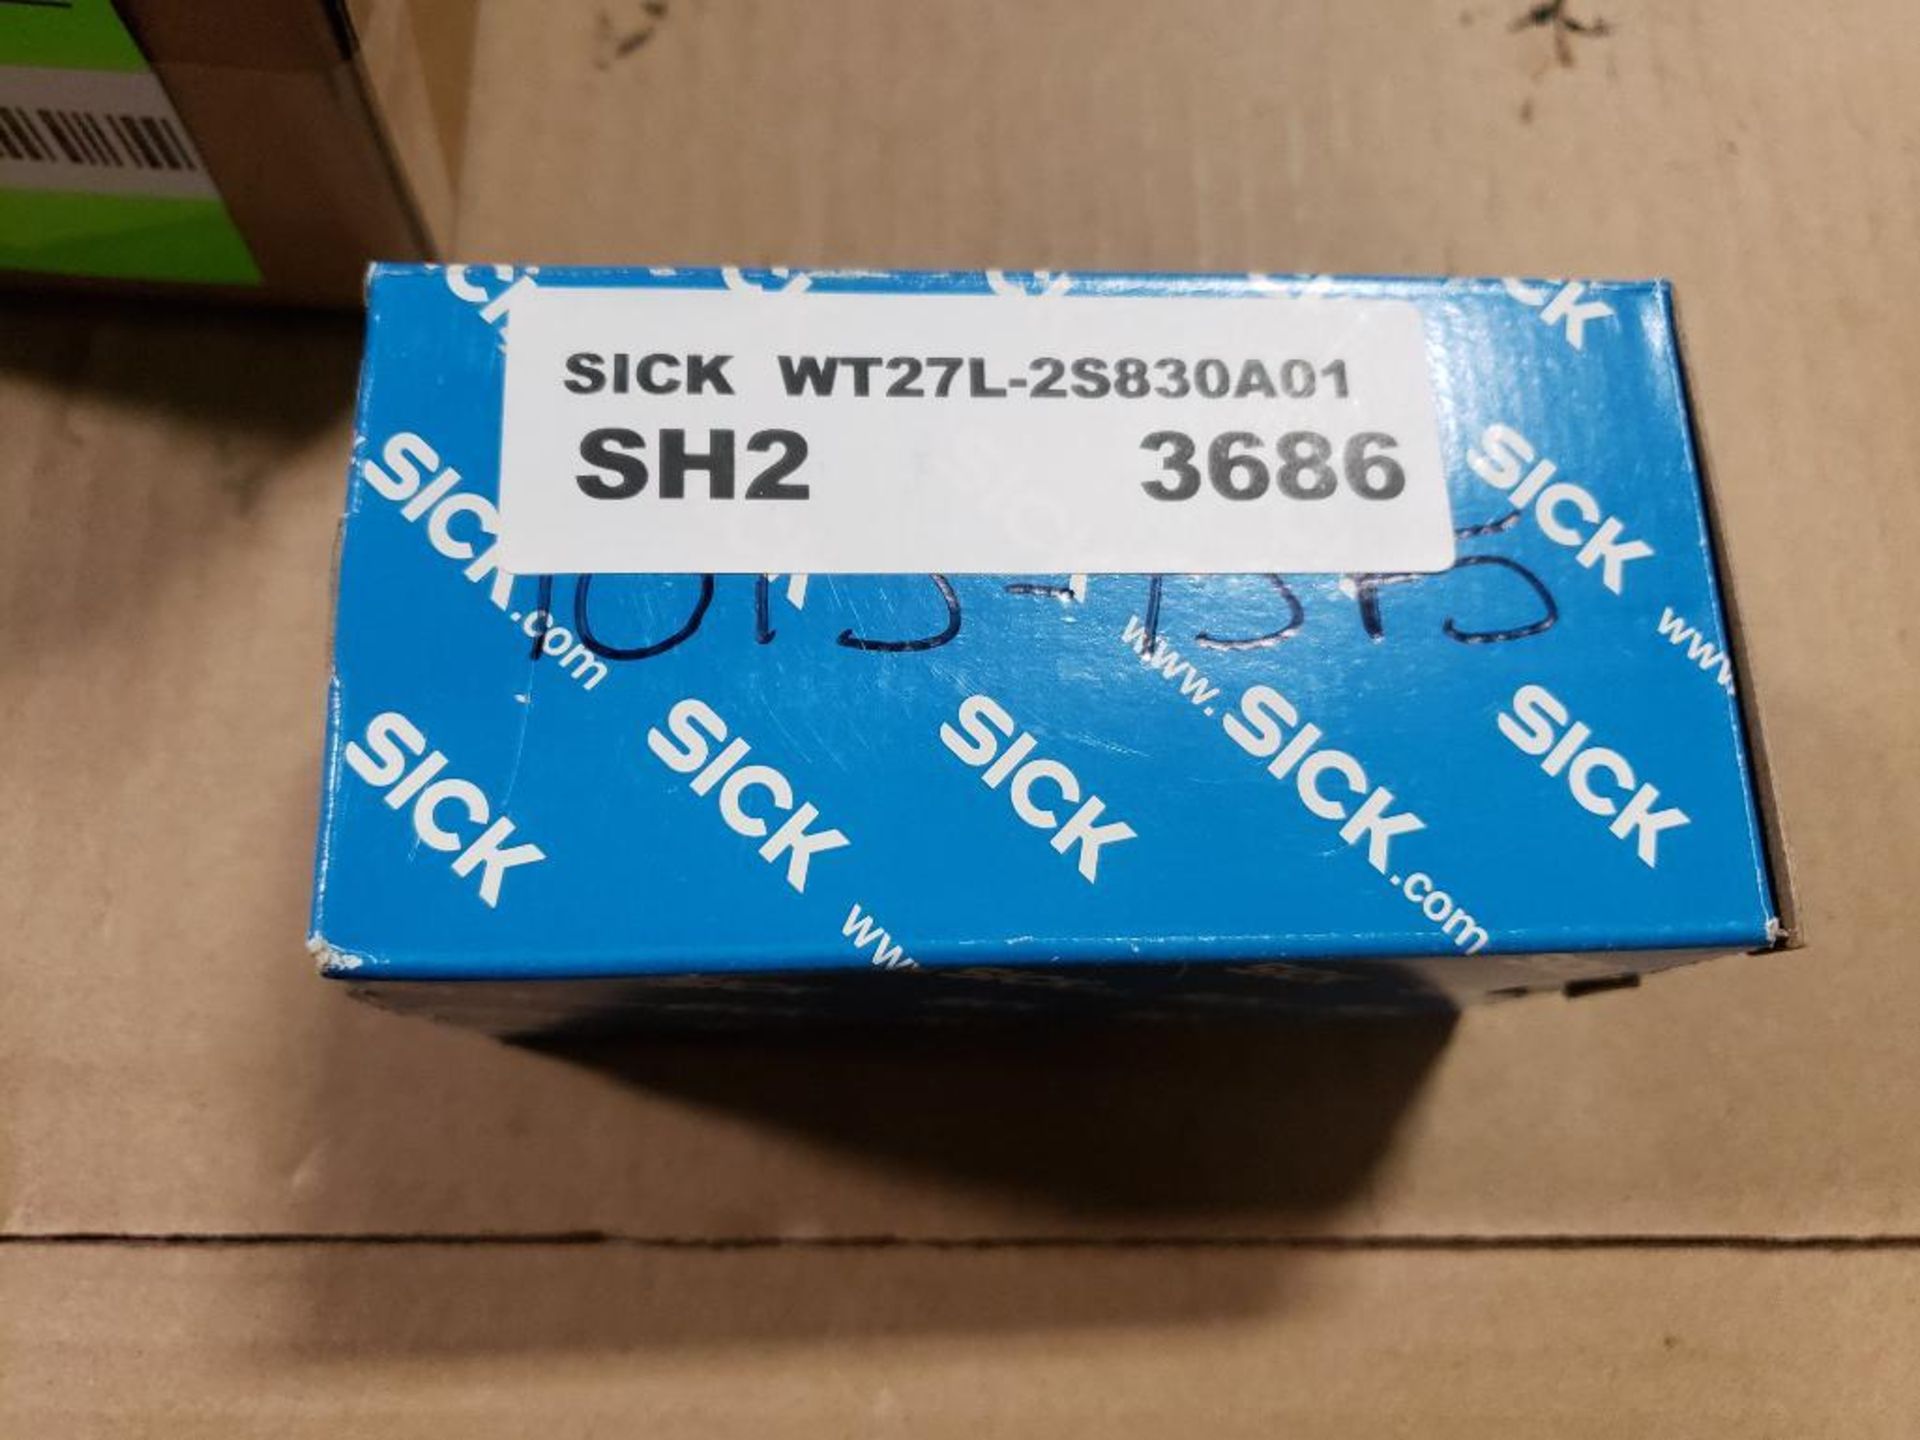 Sick WT27L-2S830A01 photosensor. - Image 3 of 5